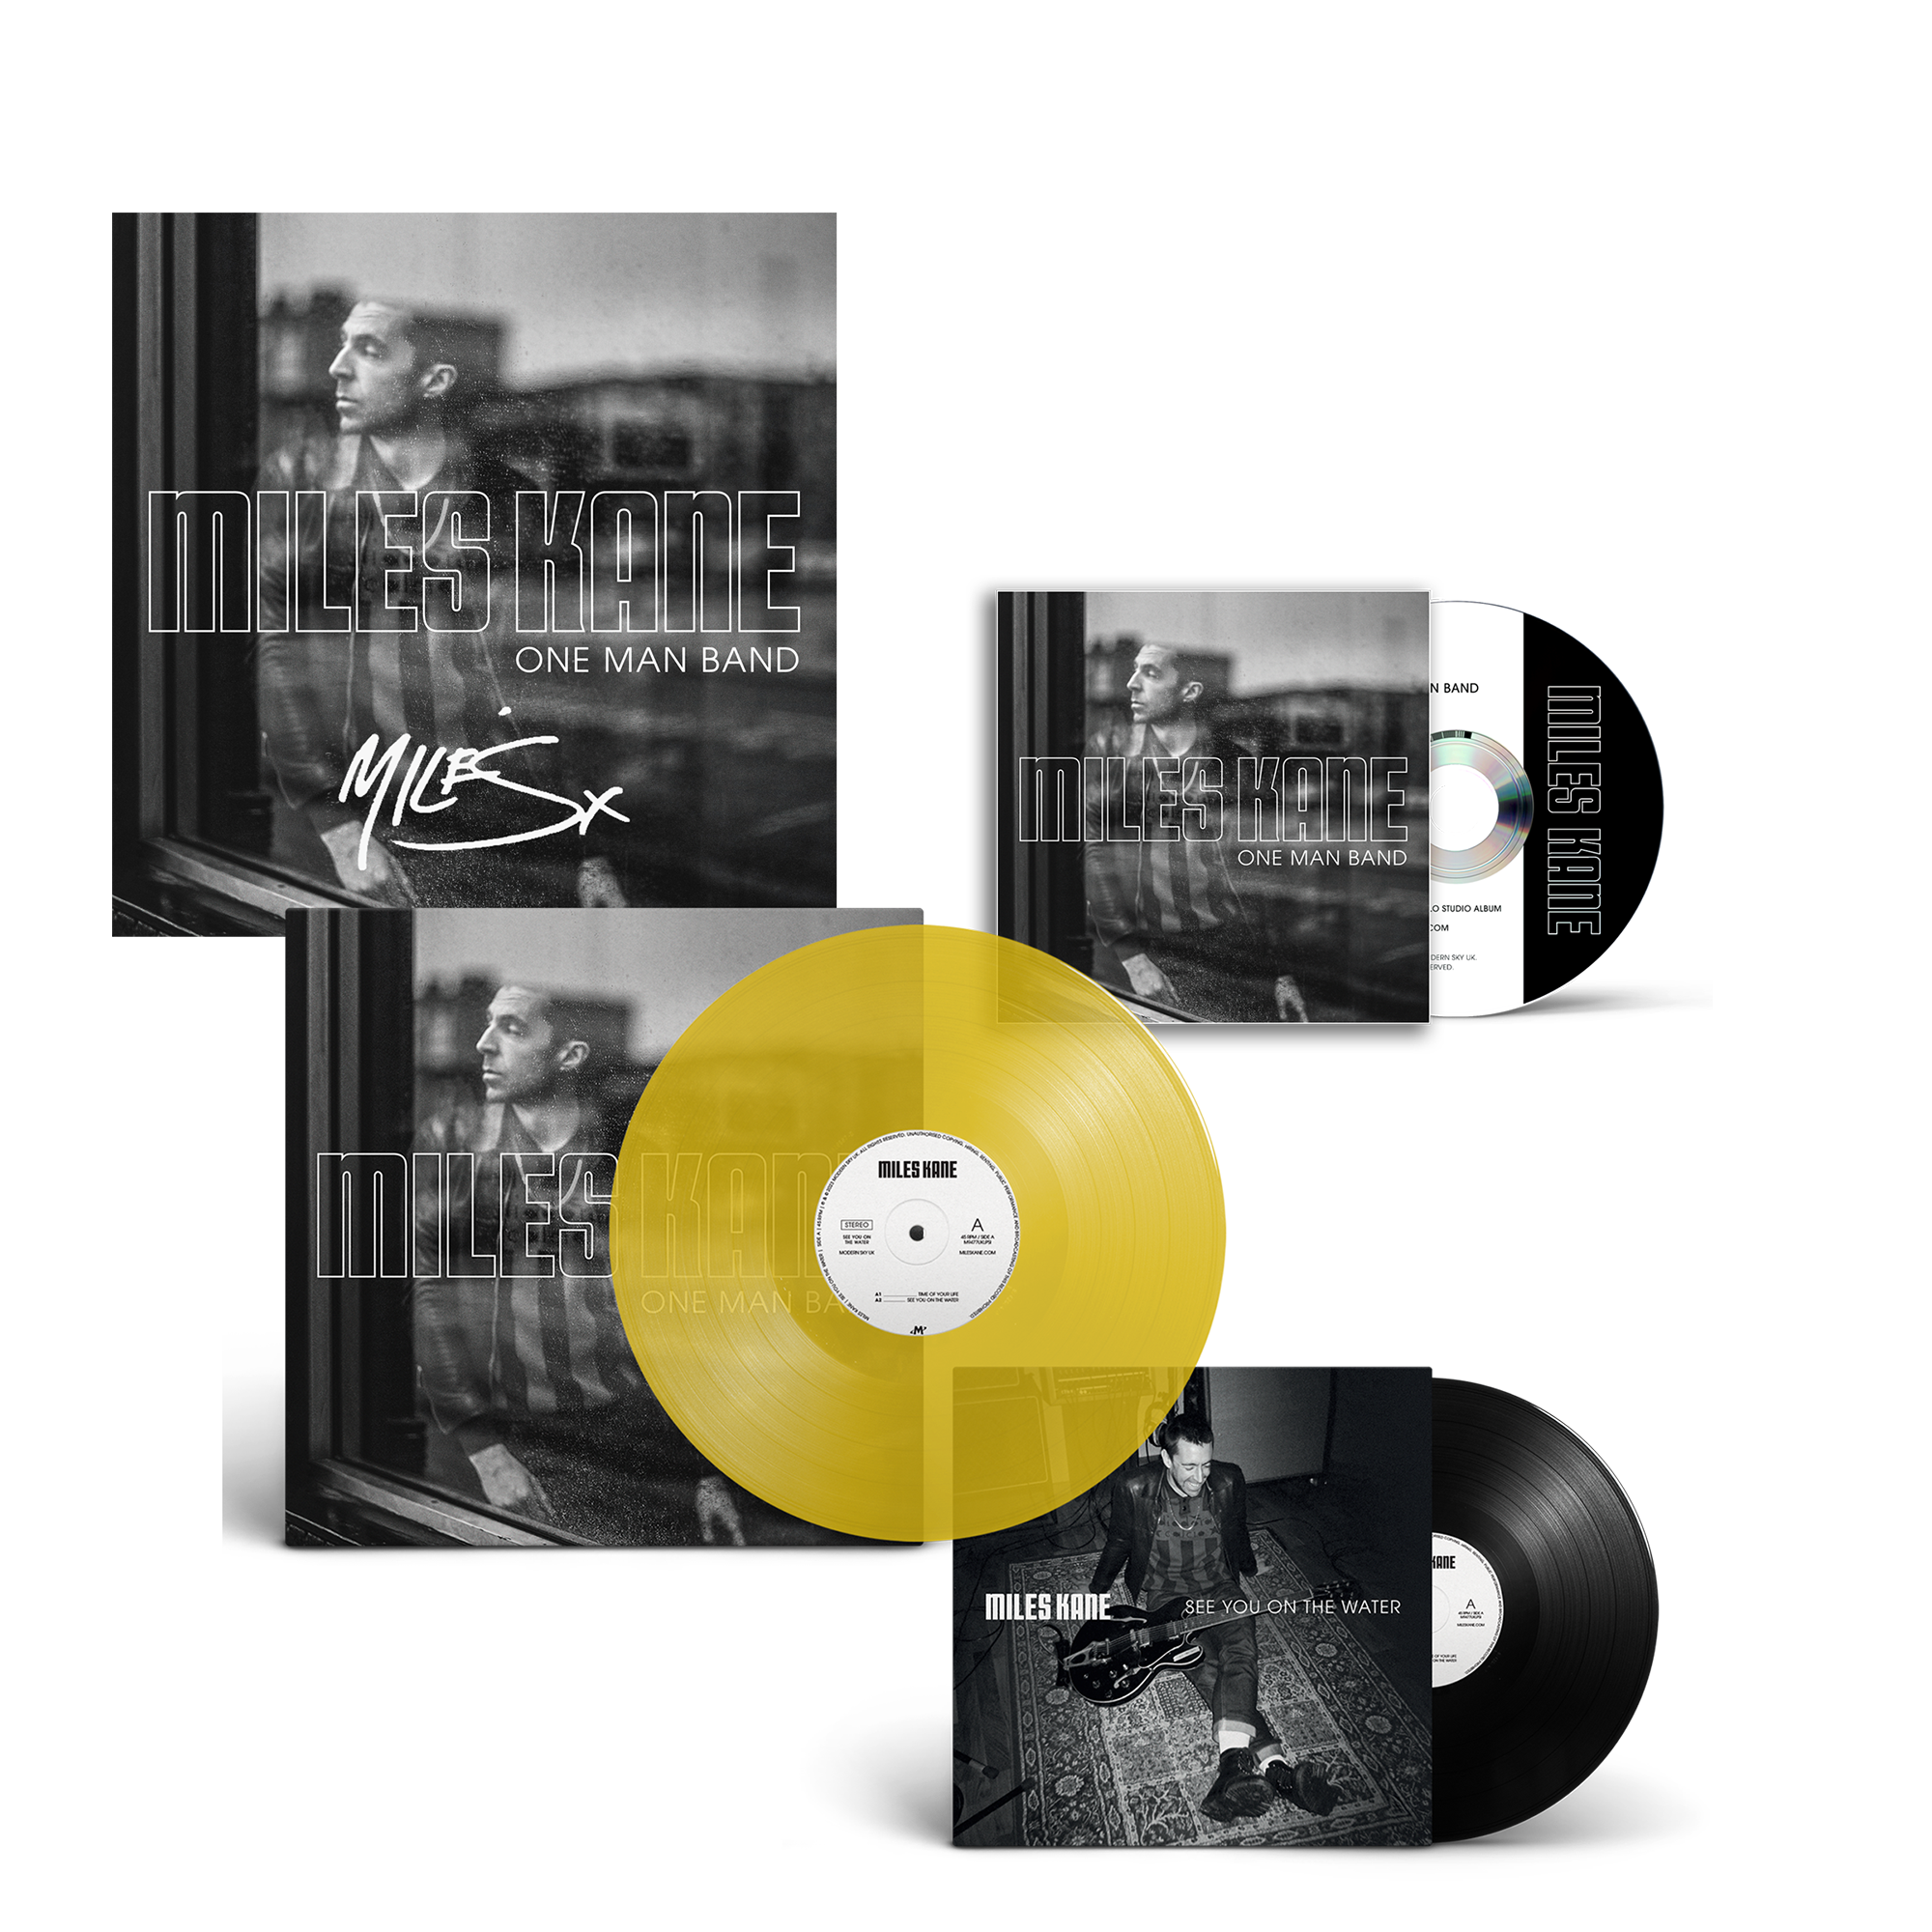 Transparent Yellow LP + 7 inch ‘(EXCLUSIVE BONUS TRACKS) + Standard CD + Signed Print